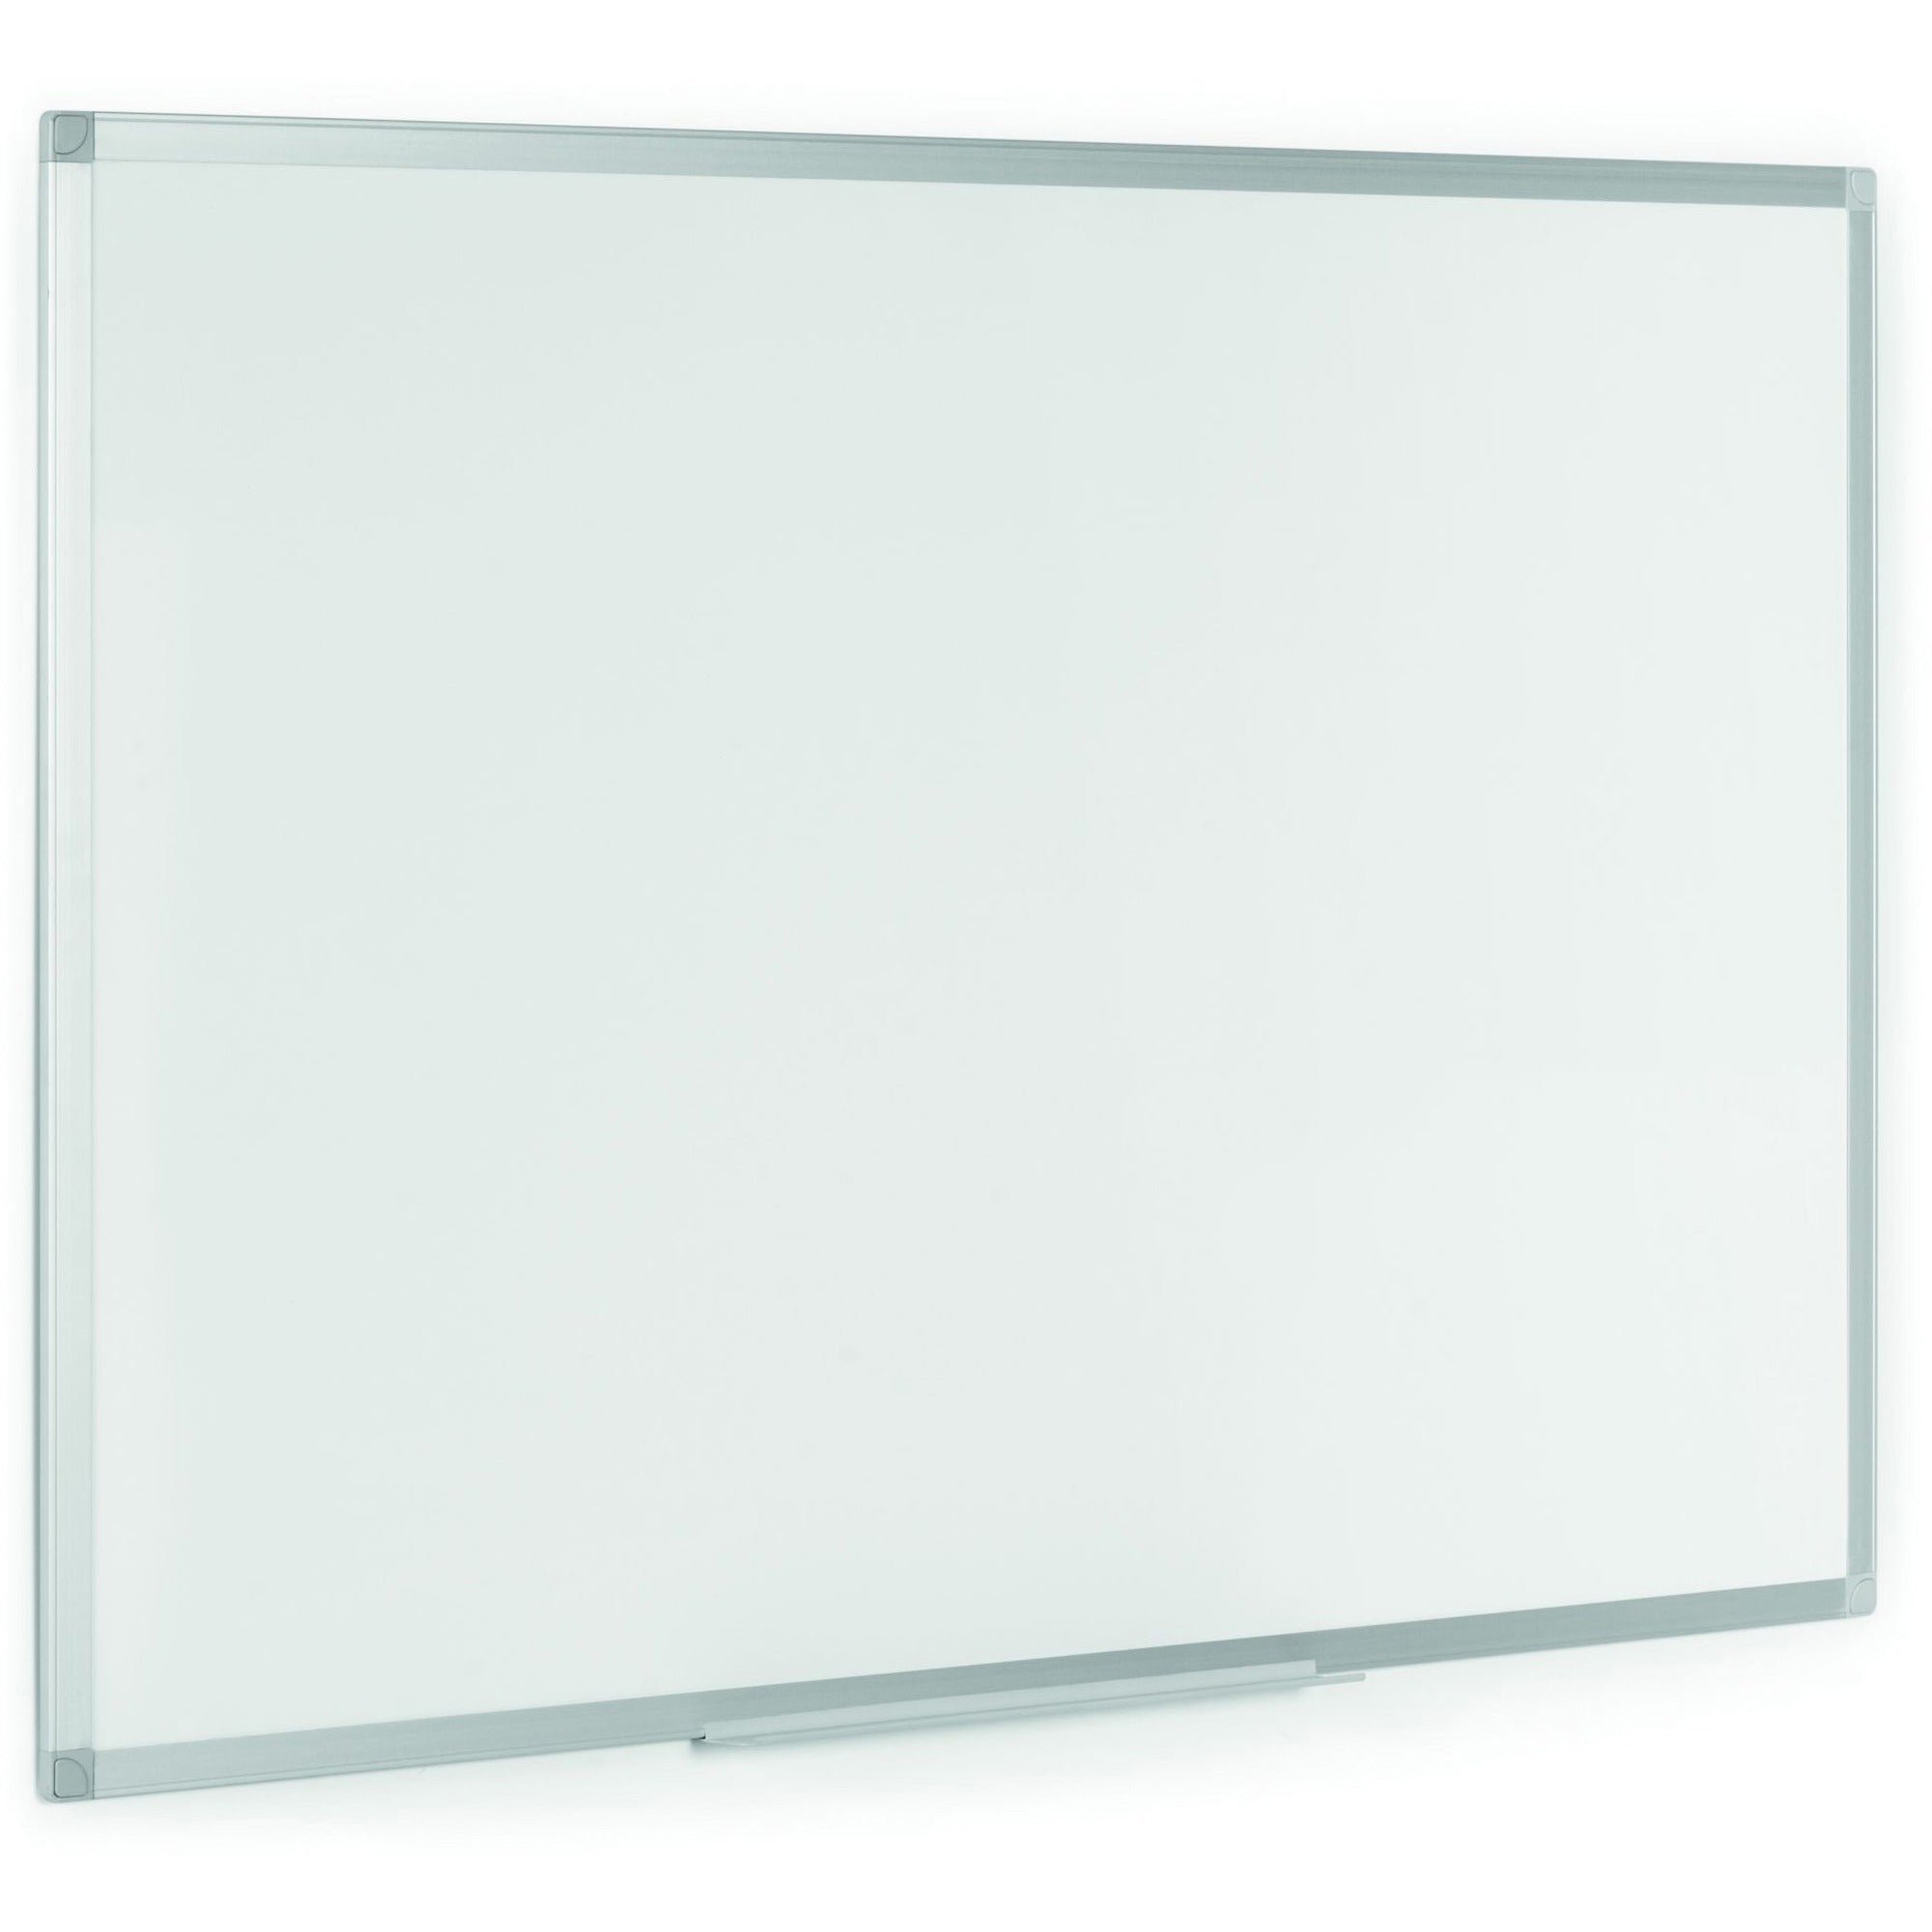 bi-silque-ayda-porcelain-dry-erase-board-24-2-ft-width-x-18-15-ft-height-white-porcelain-surface-aluminum-frame-rectangle-horizontal-vertical-magnetic-1-each_bvccr04999214 - 3